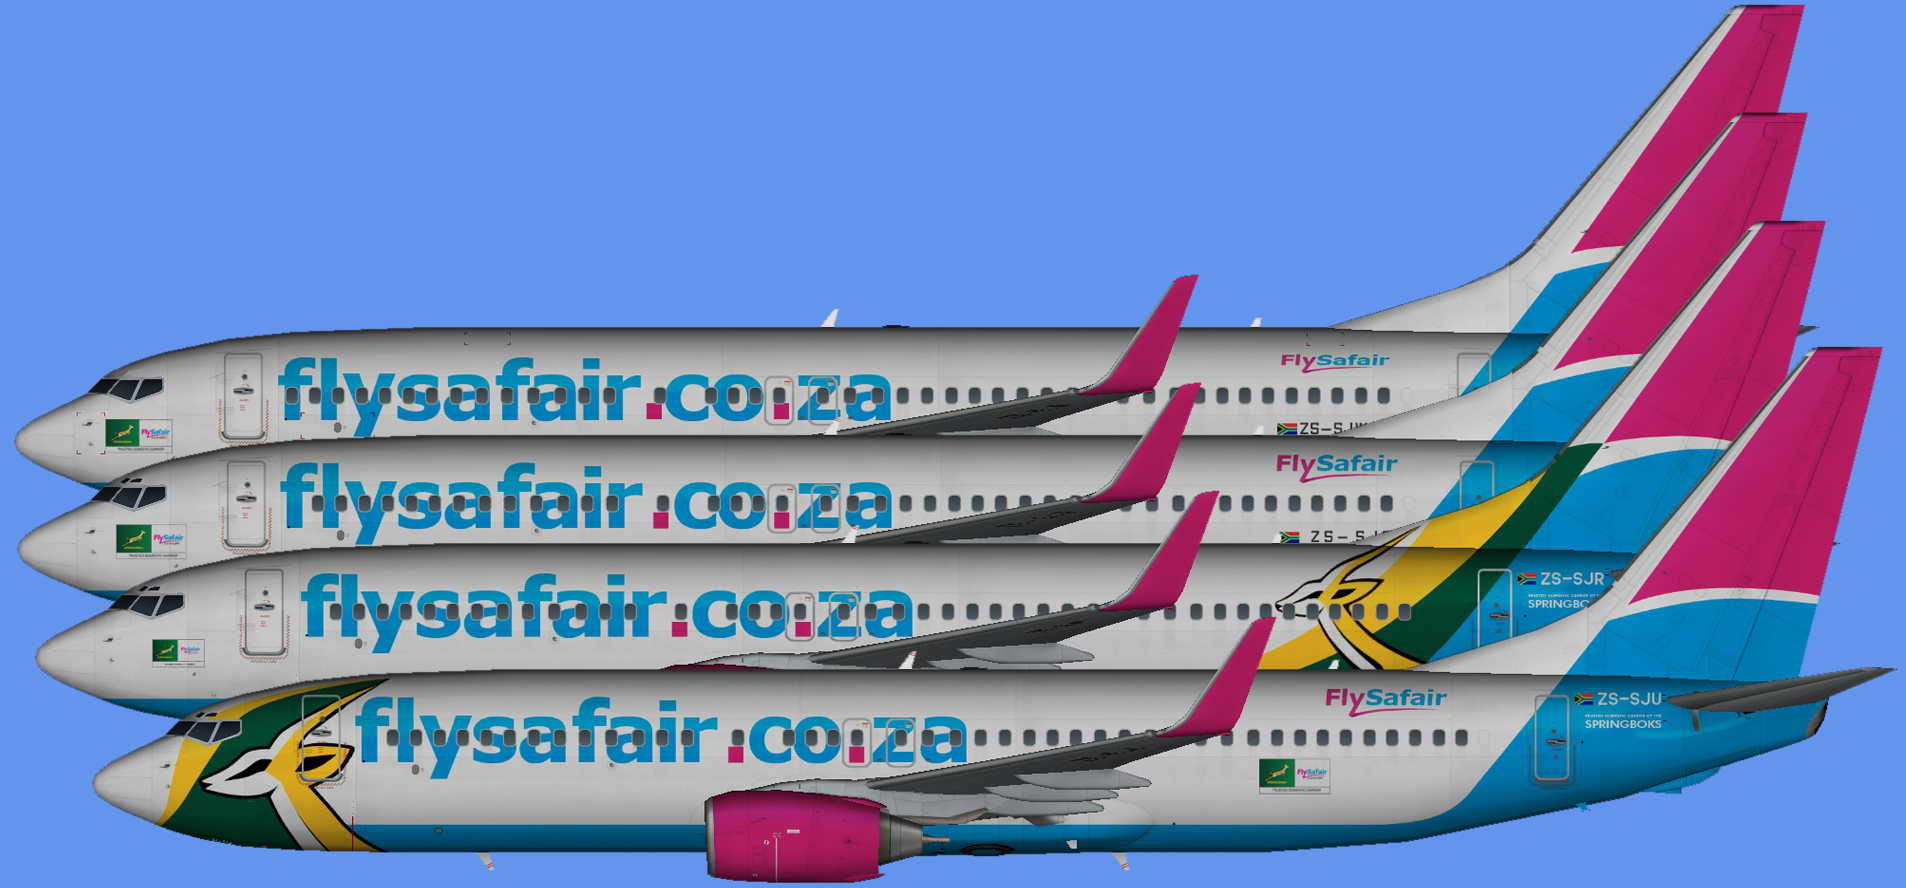 FlySafair Boeing 737-800 fleet 2019